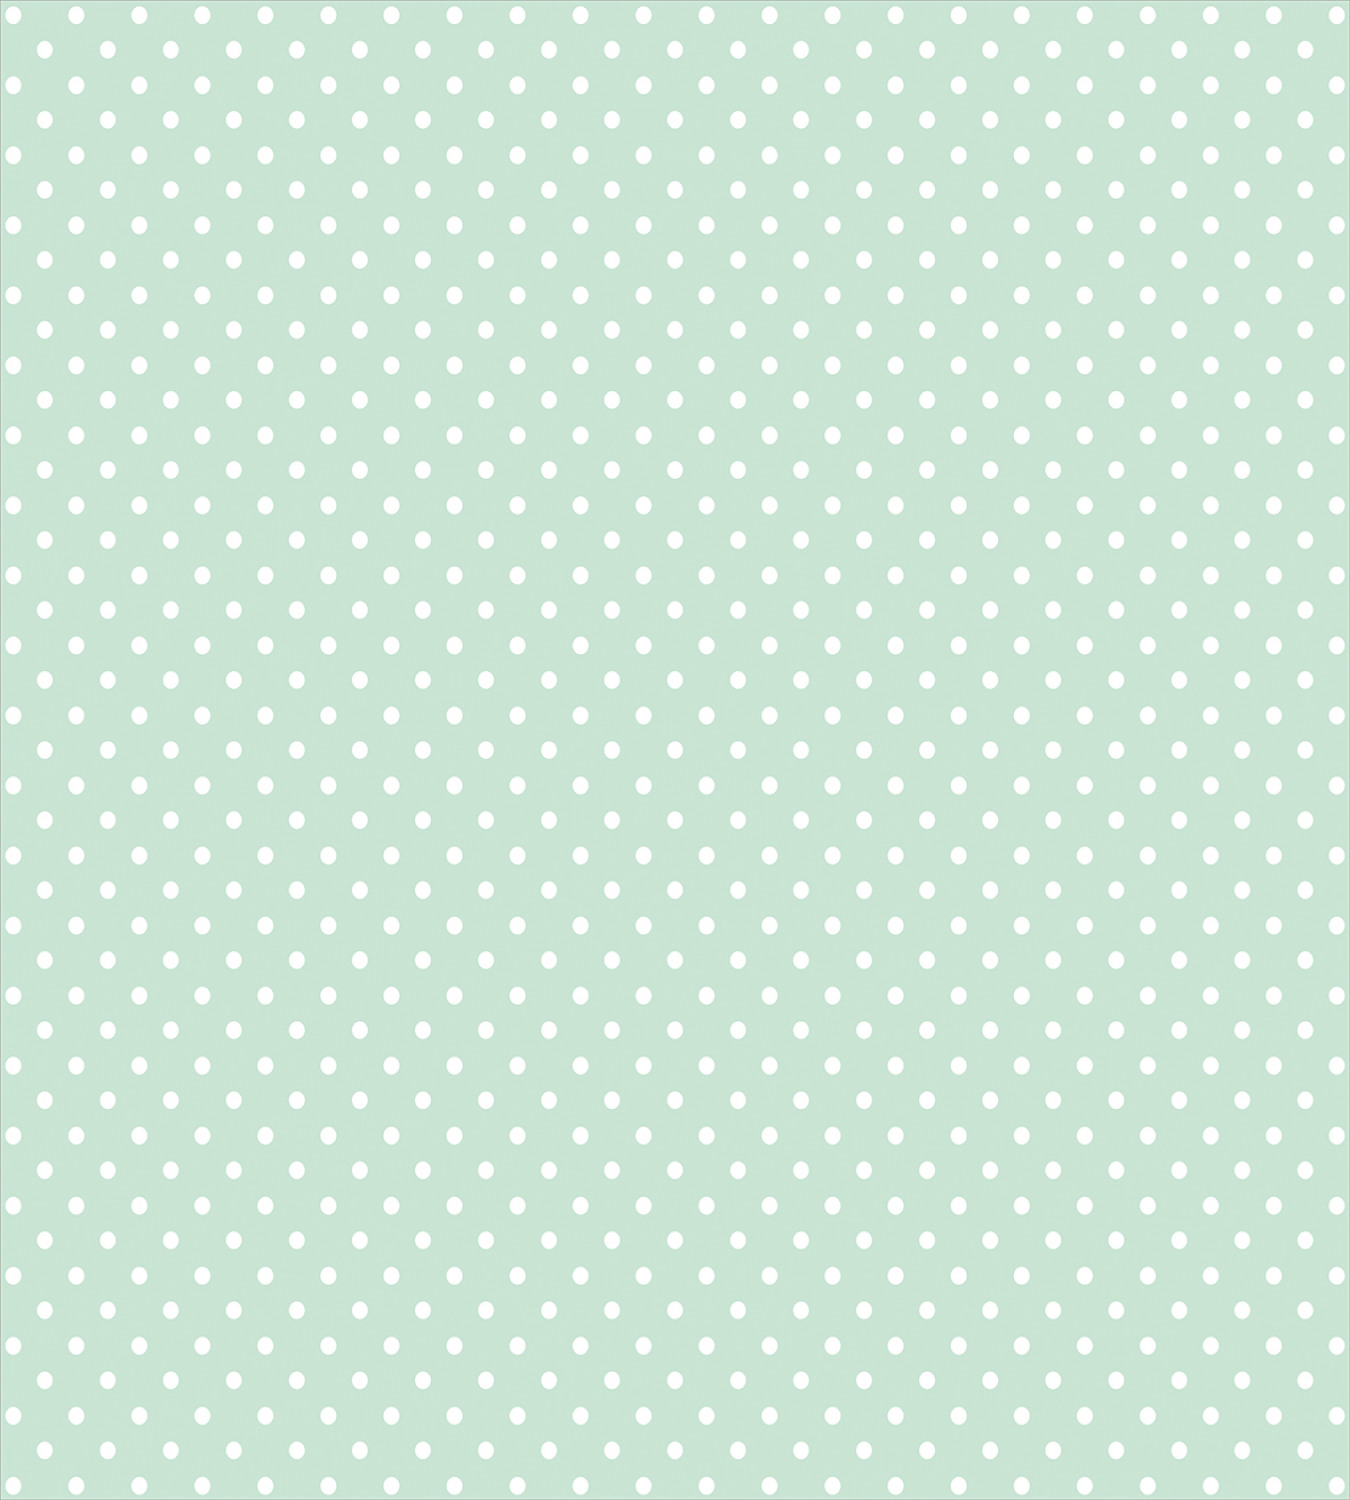 Green Duvet Cover Set with Pillow Shams White Simple Polka Dots Print